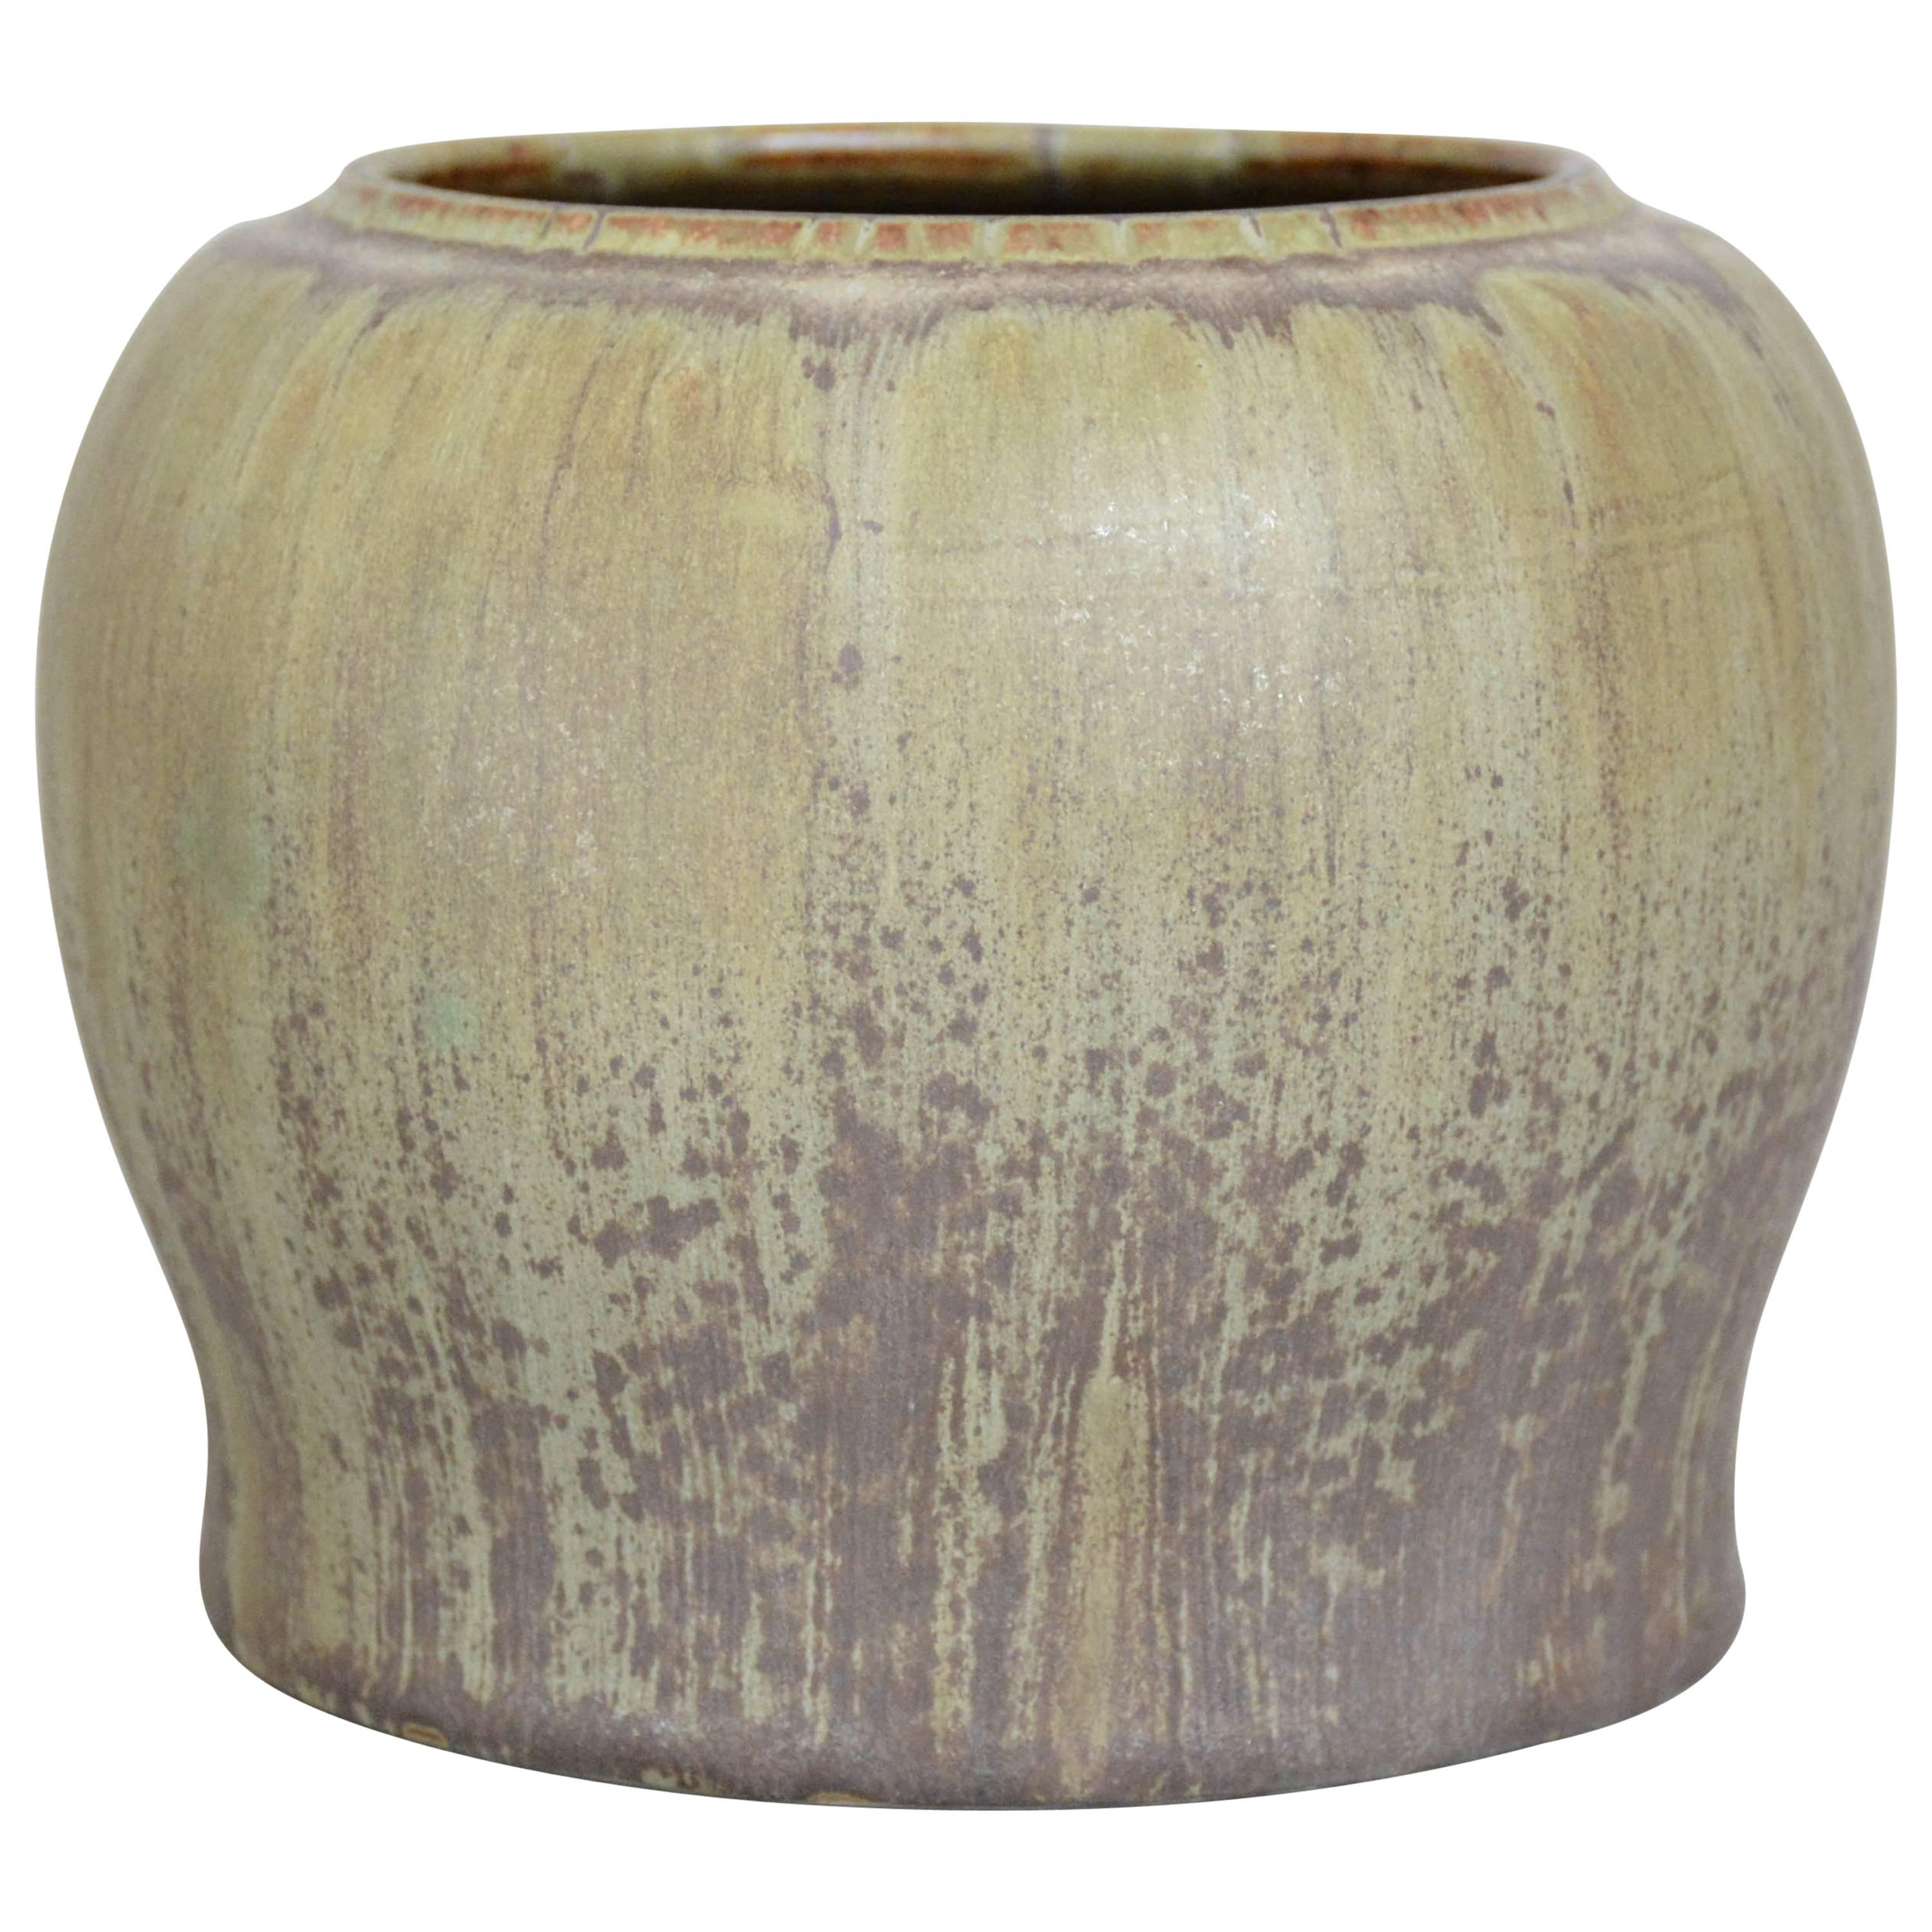 Stoneware Vase in Style of Patrick Nordstrom for Royal Copenhagen